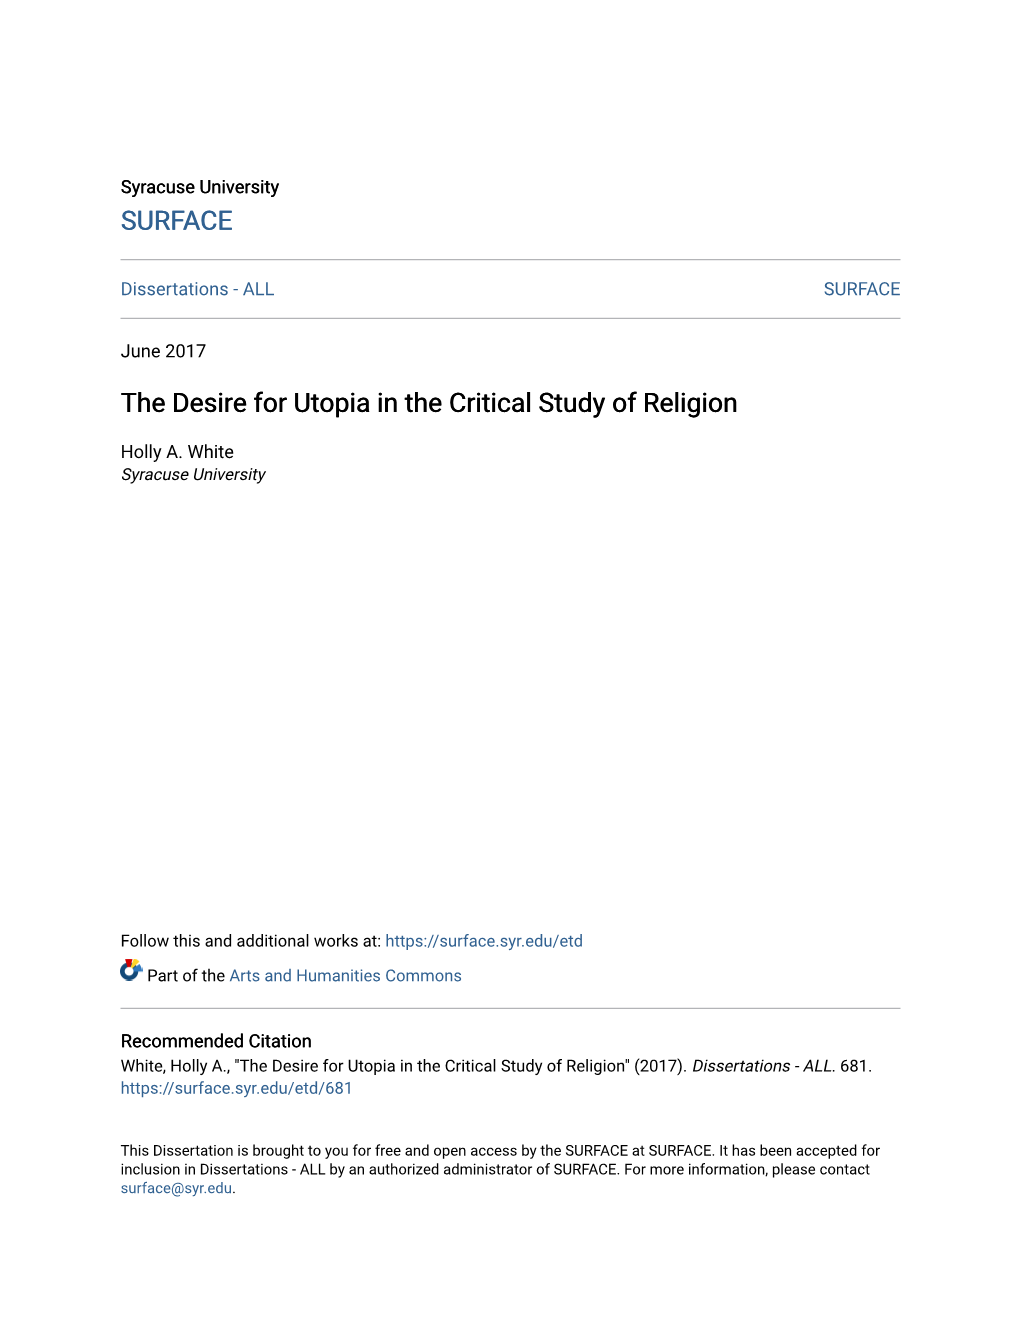 The Desire for Utopia in the Critical Study of Religion